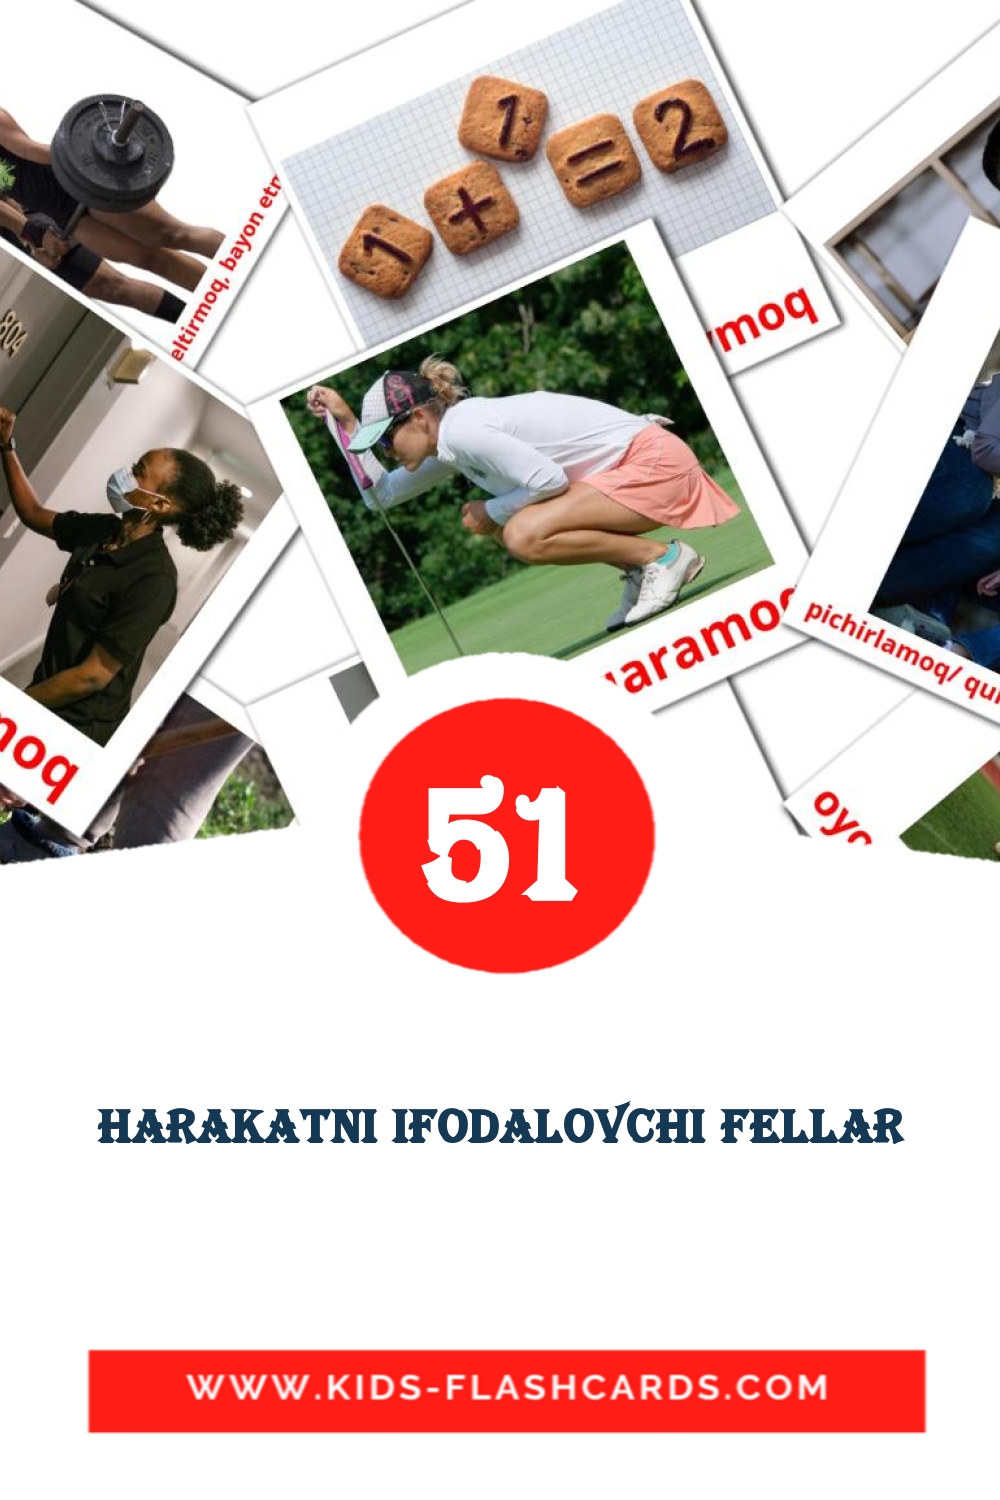 51 carte illustrate di Harakatni ifodalovchi fellar per la scuola materna in uzbek